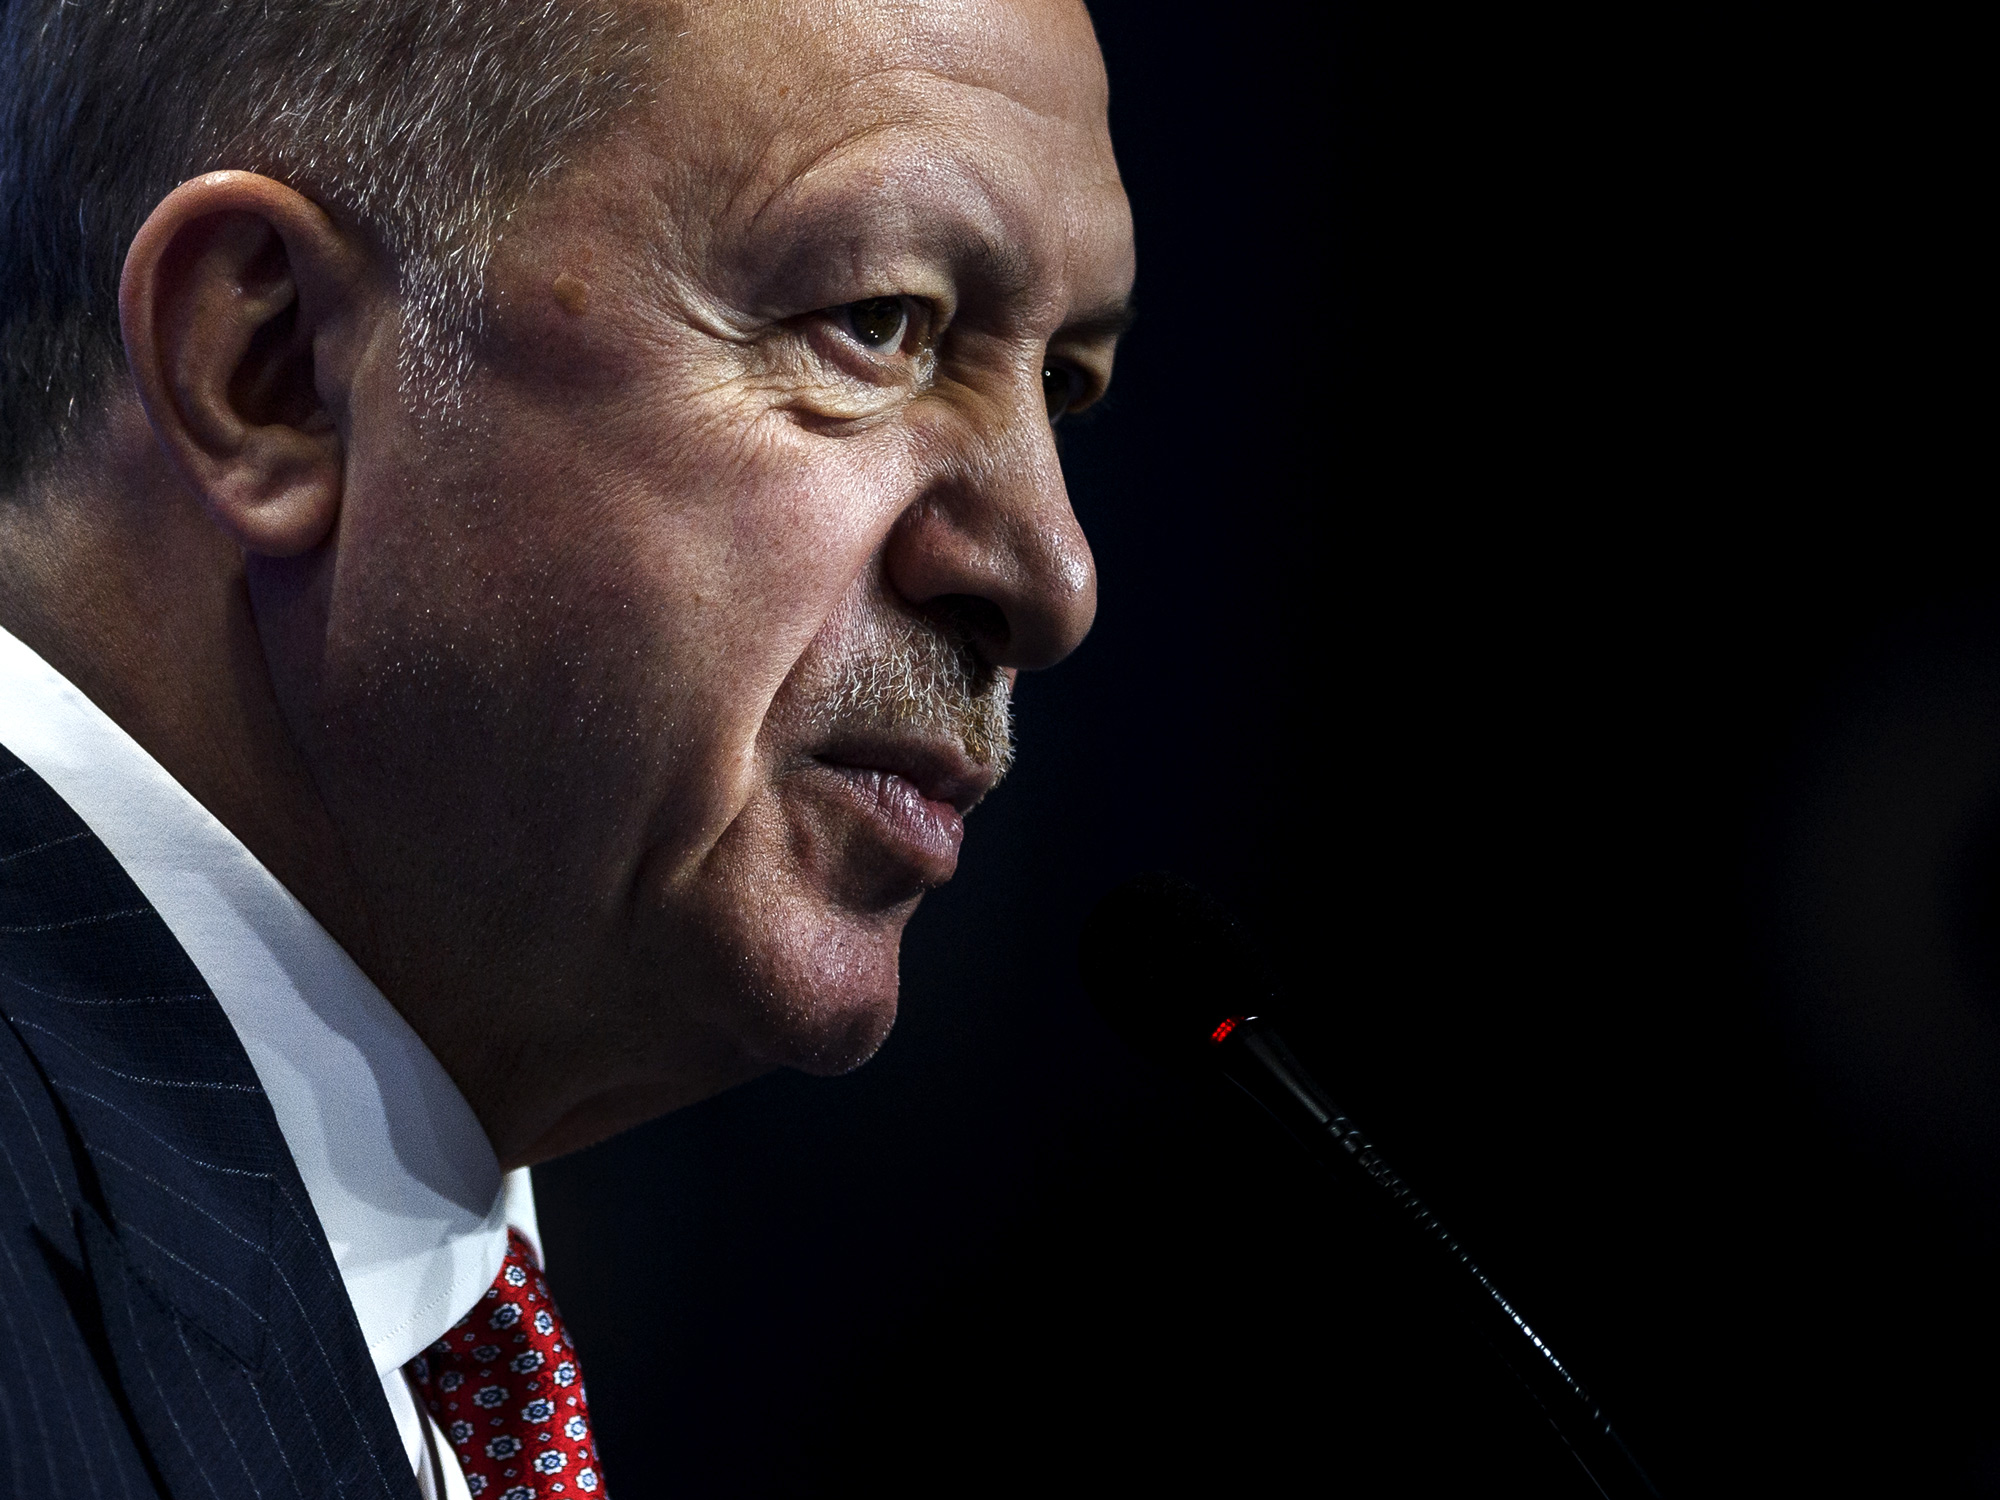 Recep Tayyip Erdogan’s popularity is waning amid pandemic-induced hardship.